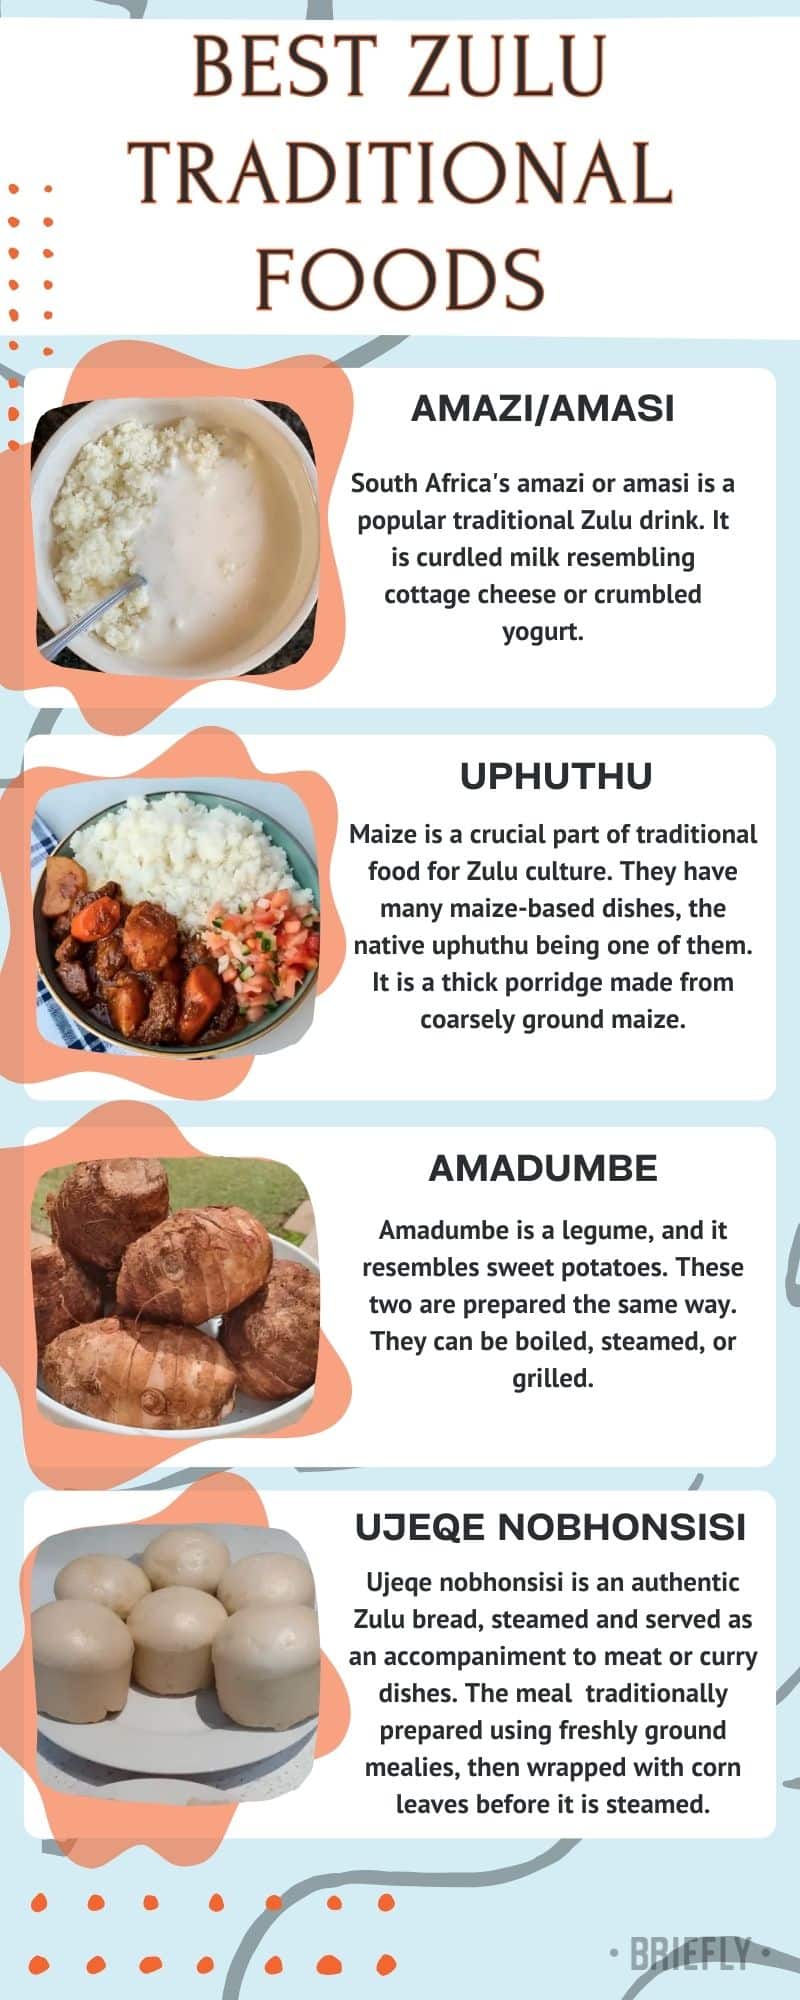 Best Zulu traditional foods